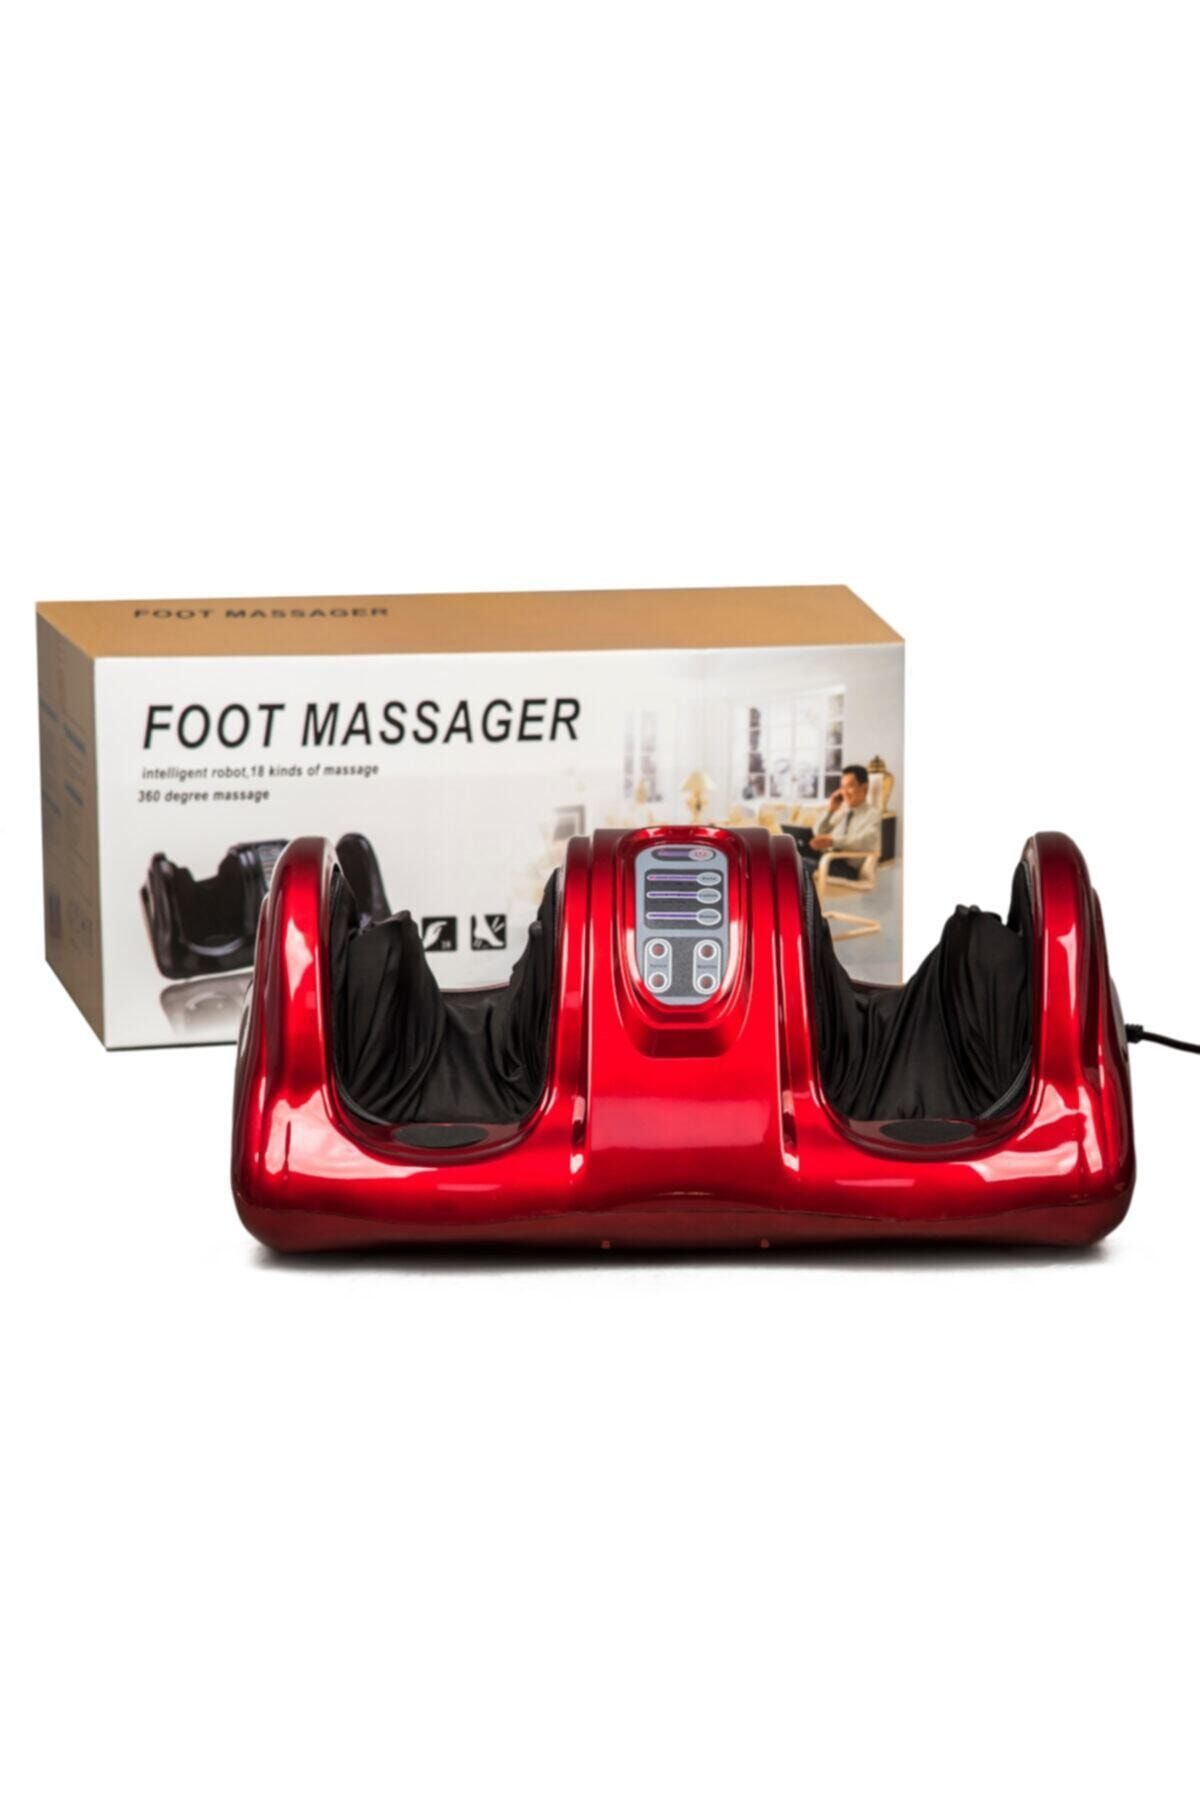 Jade Master Refleksoloji Ayak Masaj Aleti ( Foot Massager ) 0001